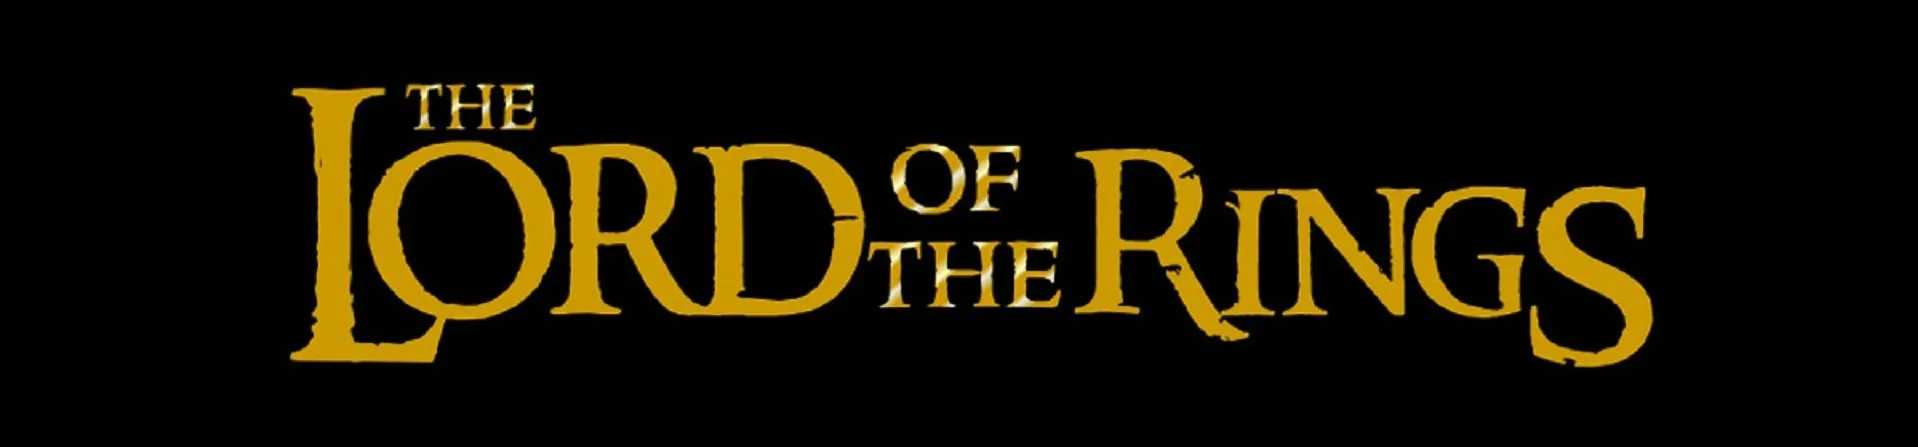 إلغاء لعبة The Lord of the Rings من Amazon